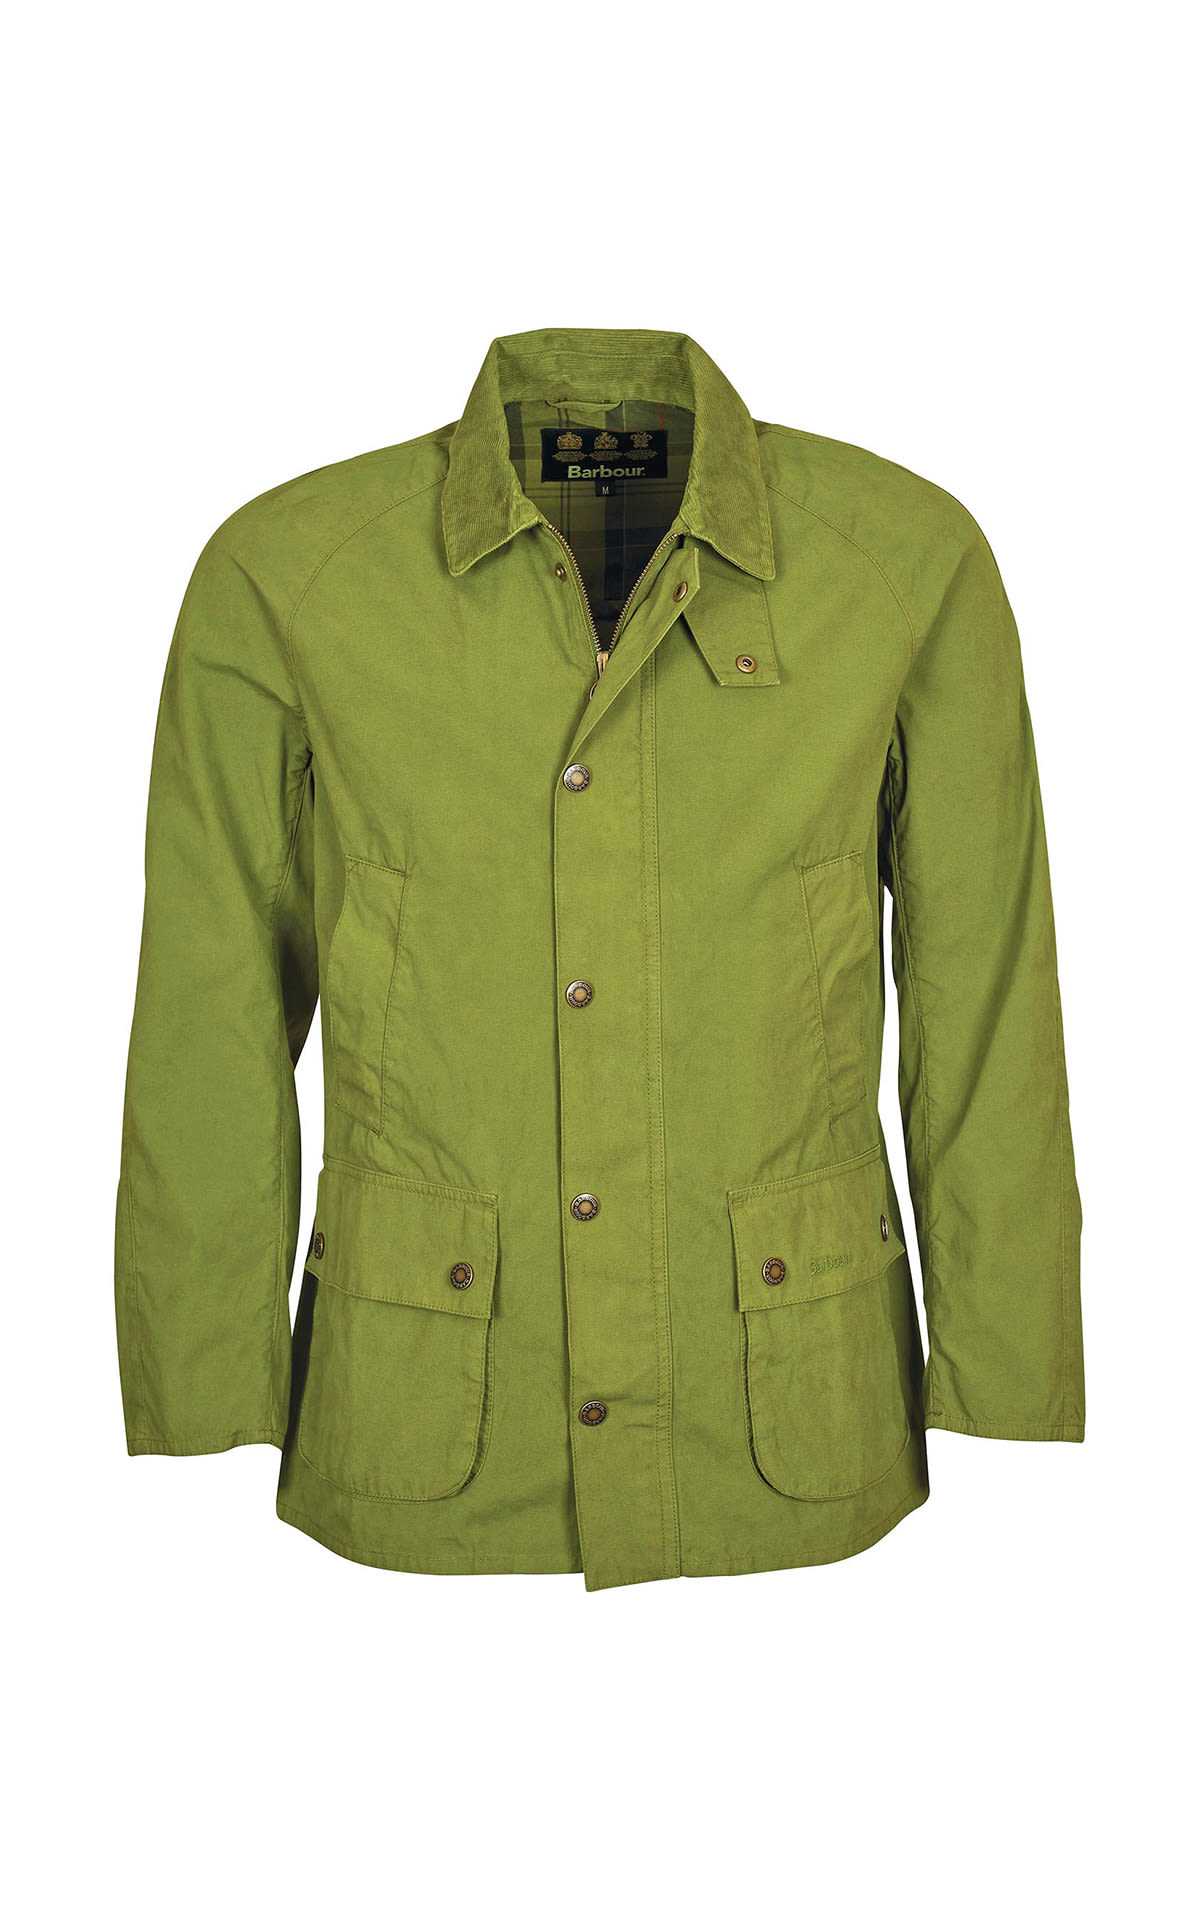 Green jacket Barbour